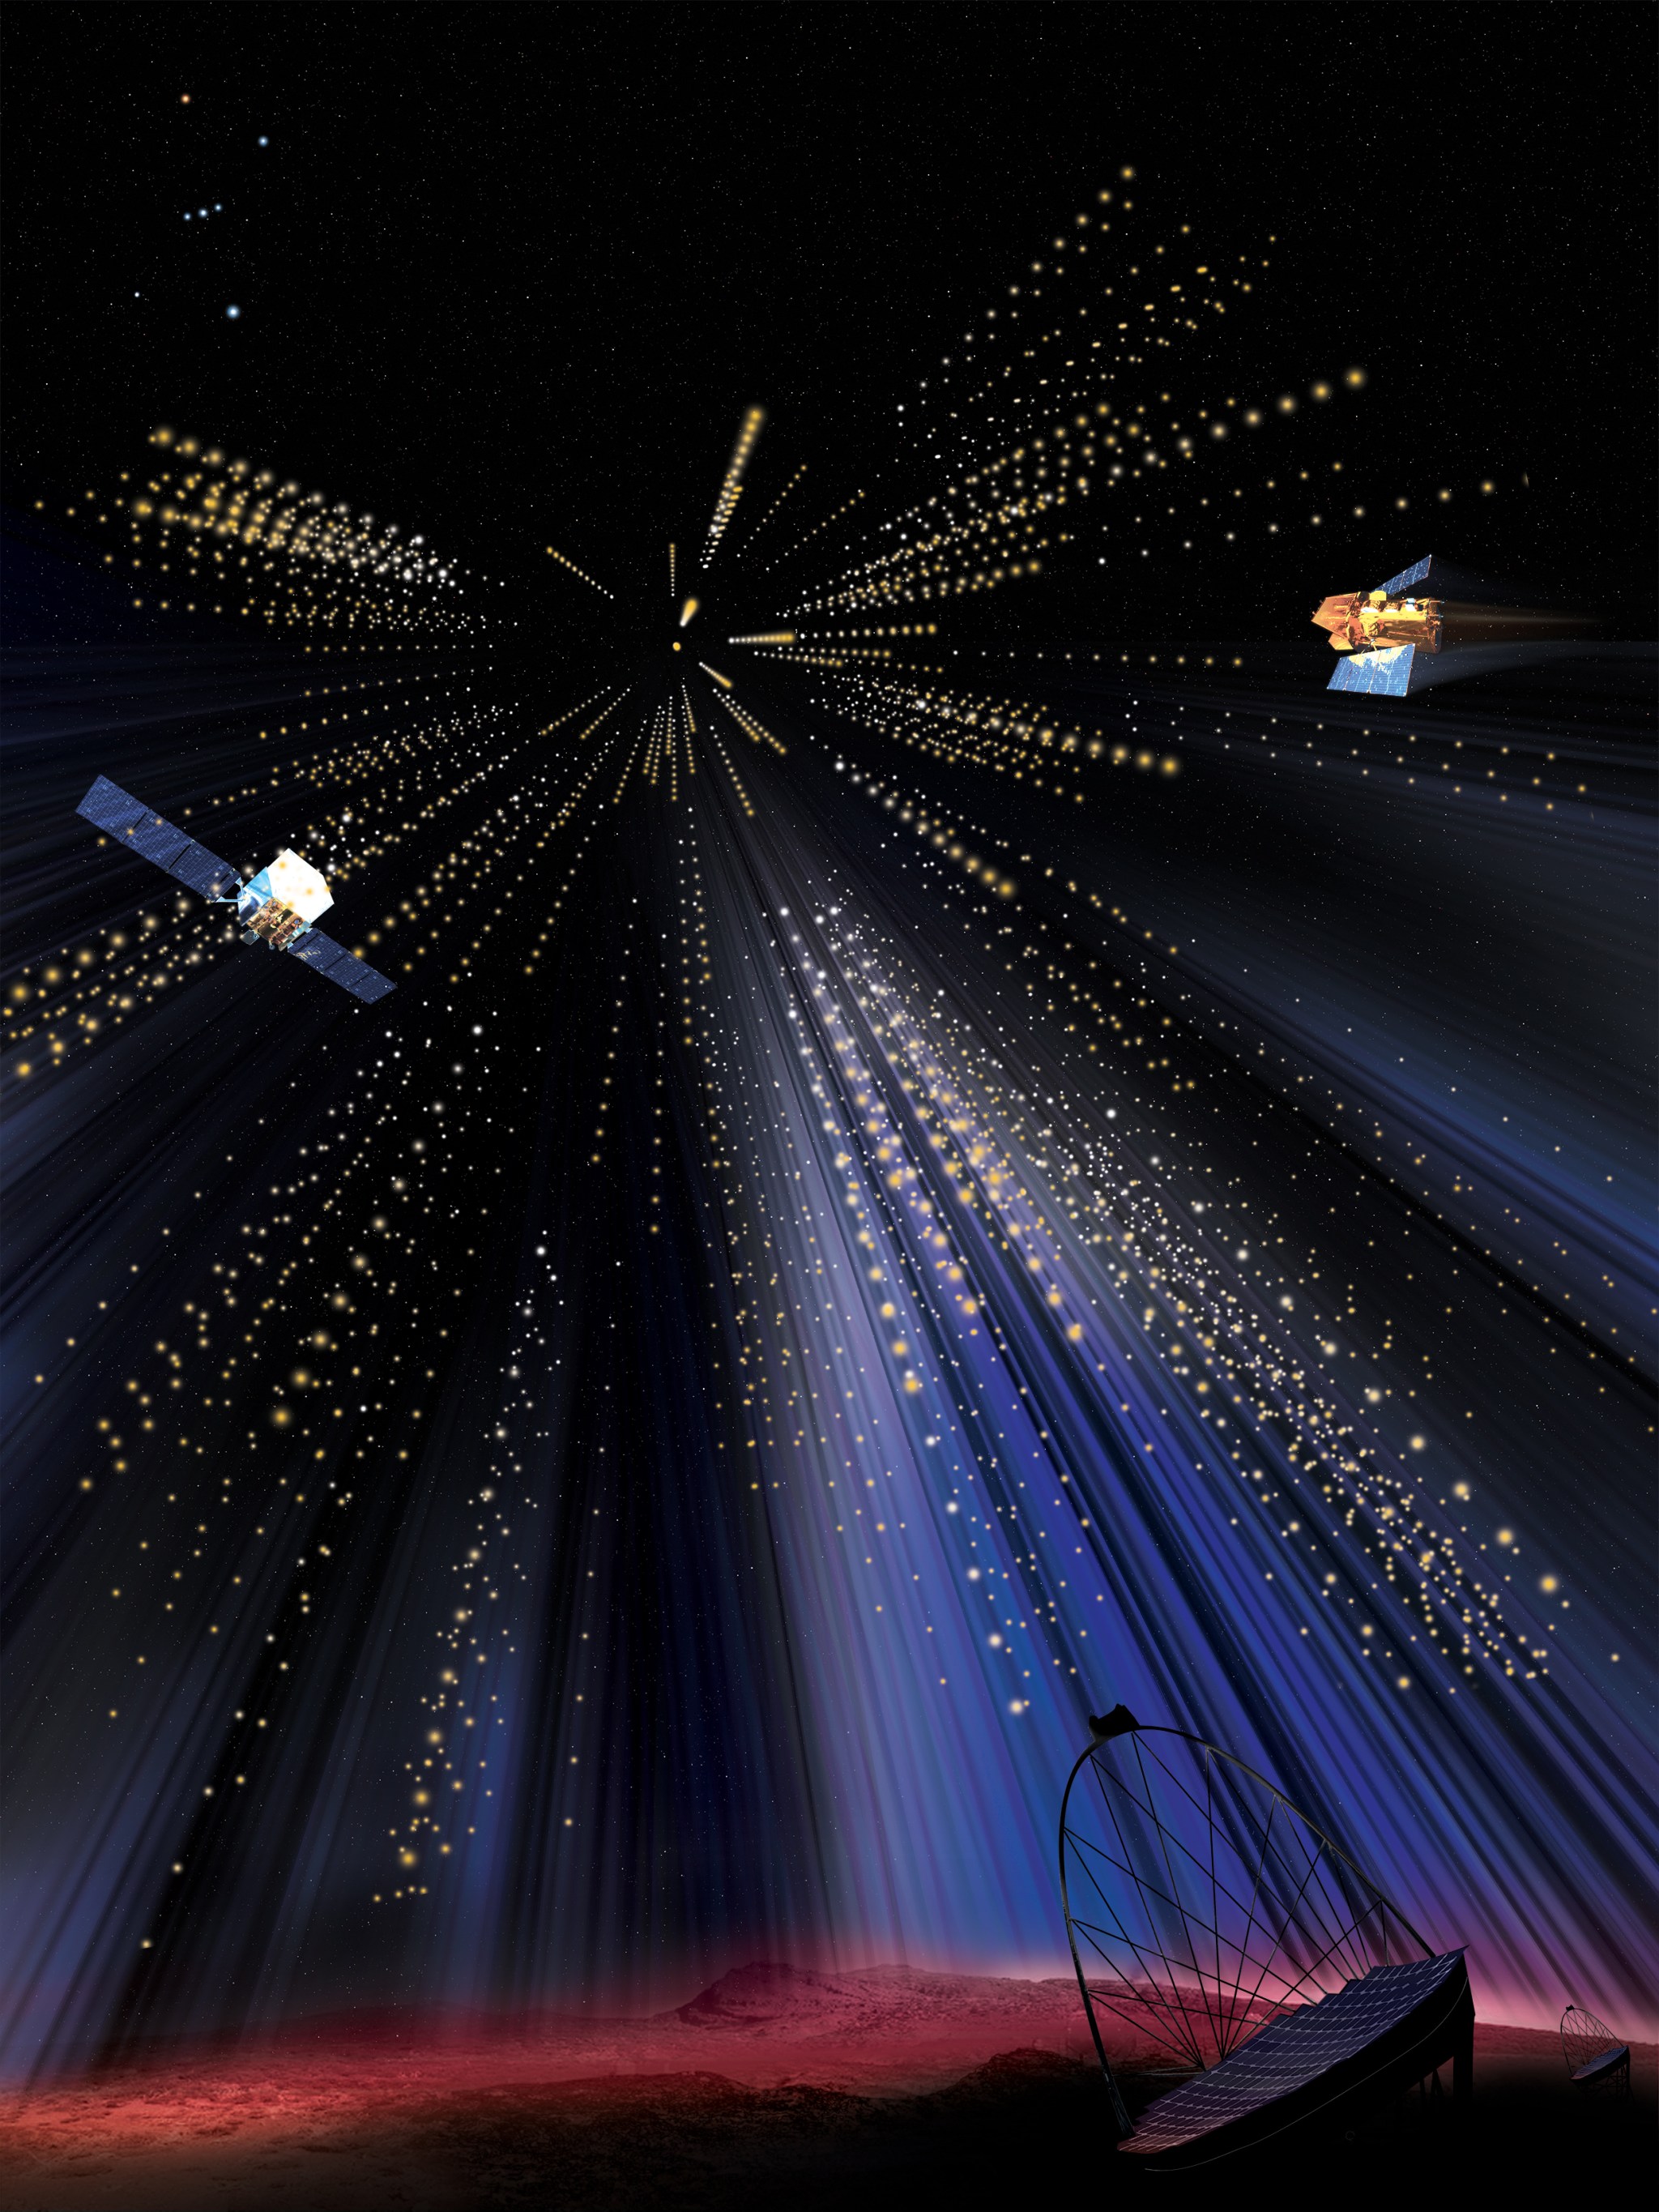 illustration showing Fermi and Swift spacecraft against stylized stellar backdrop